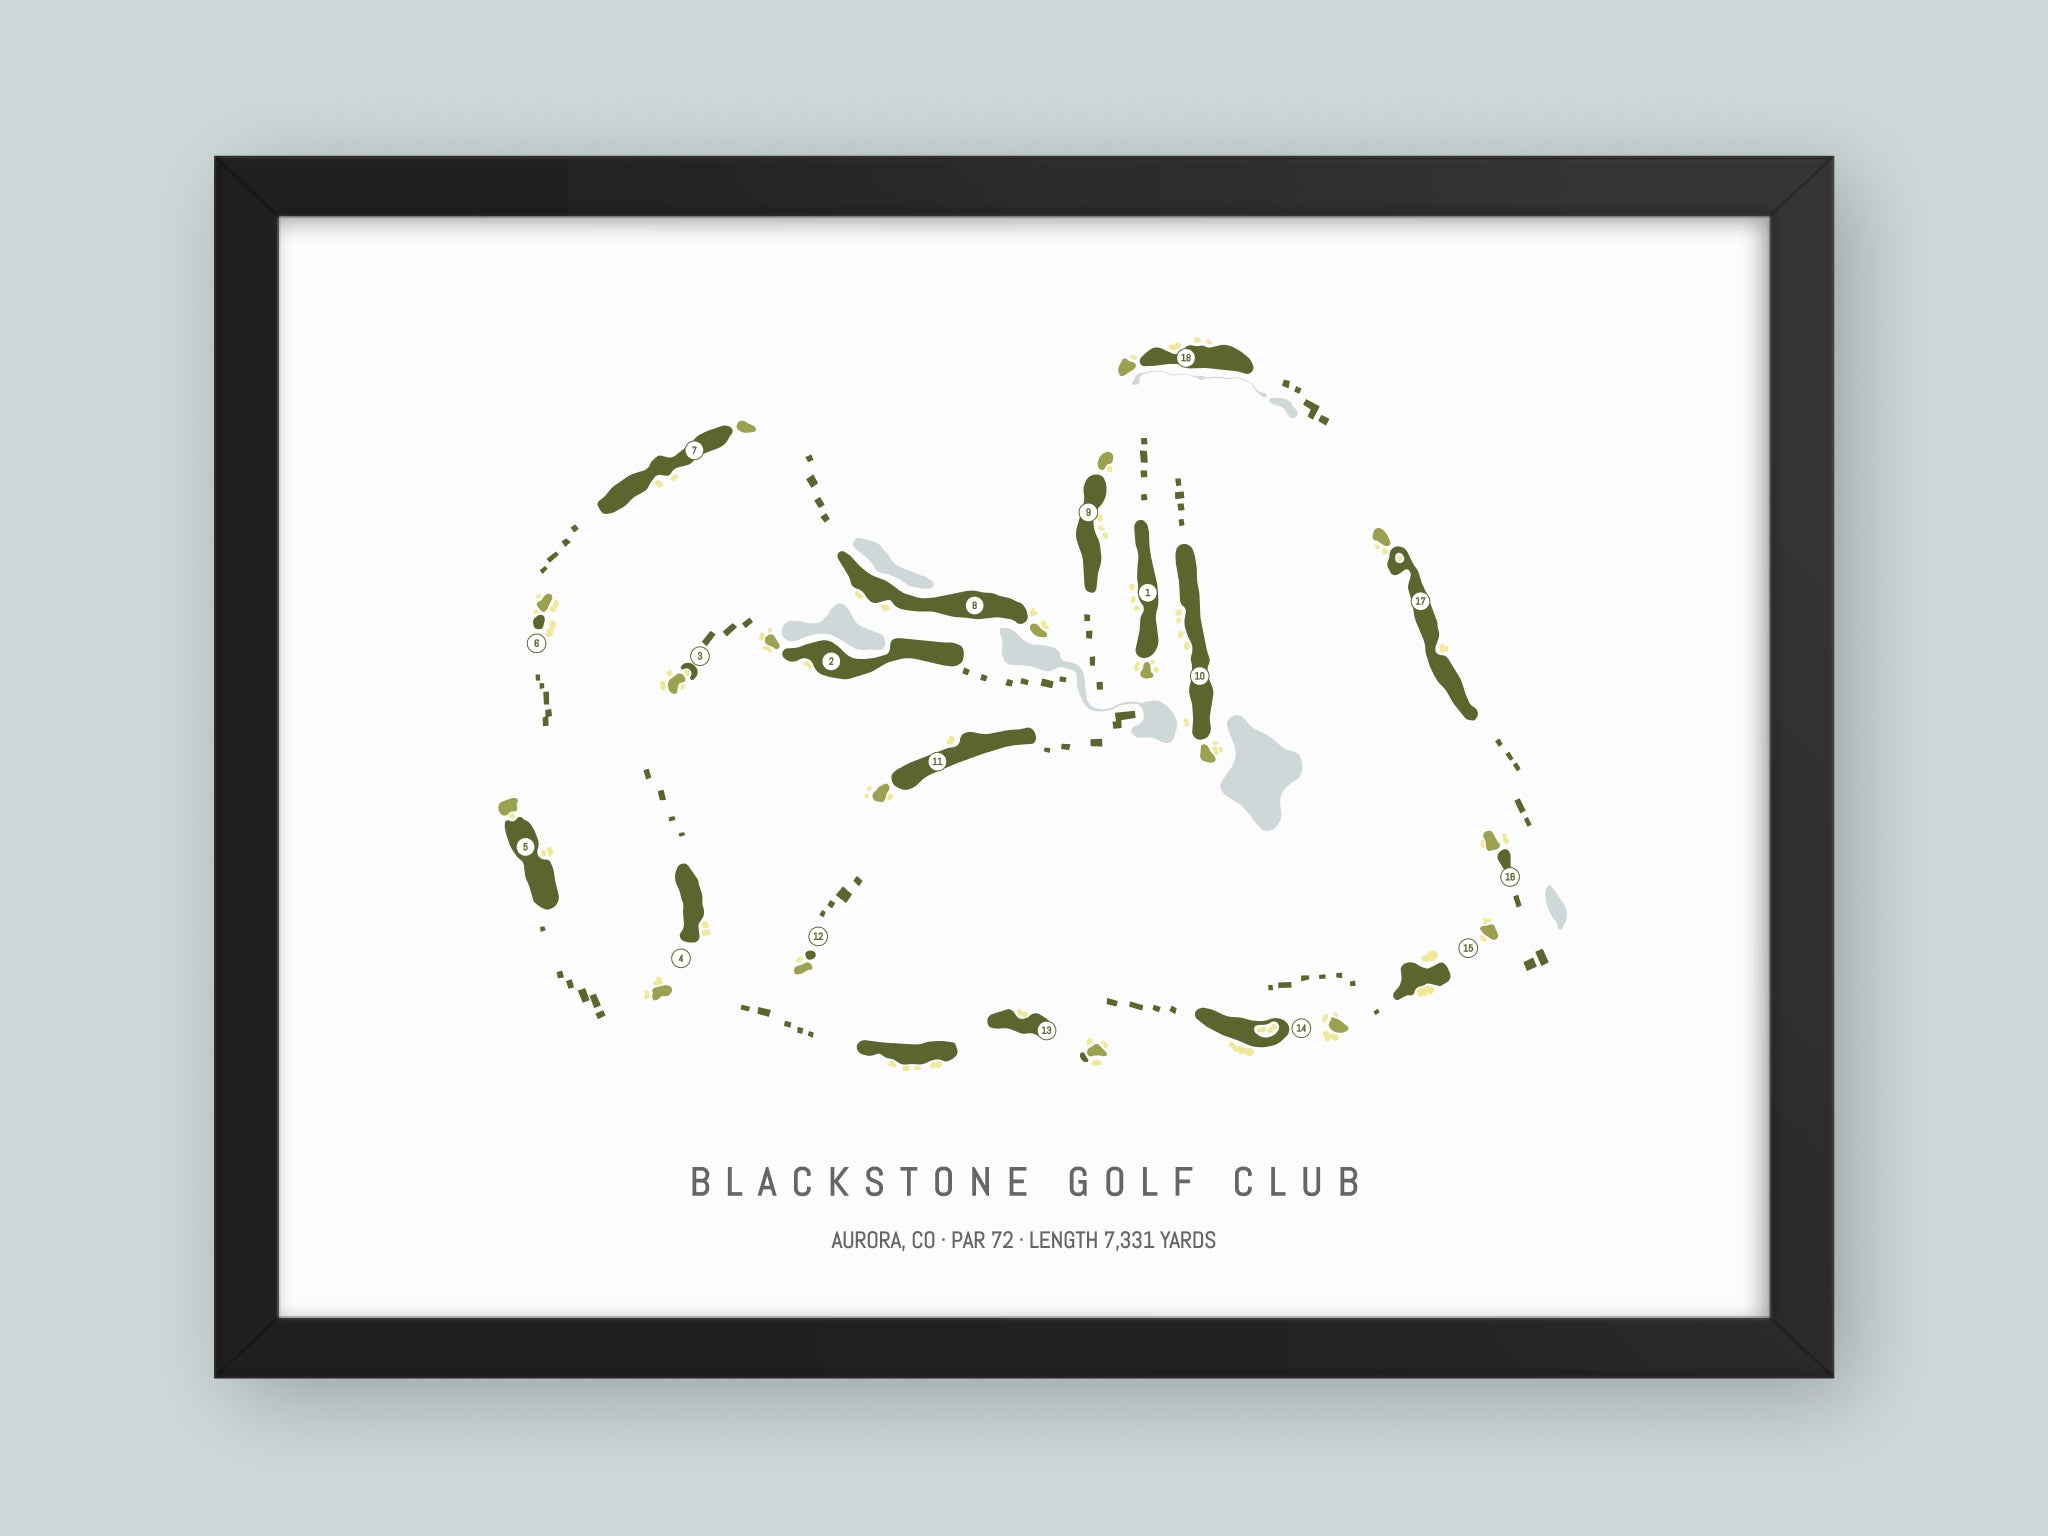 Blackstone-Golf-Club-CO--Black-Frame-24x18-With-Hole-Numbers